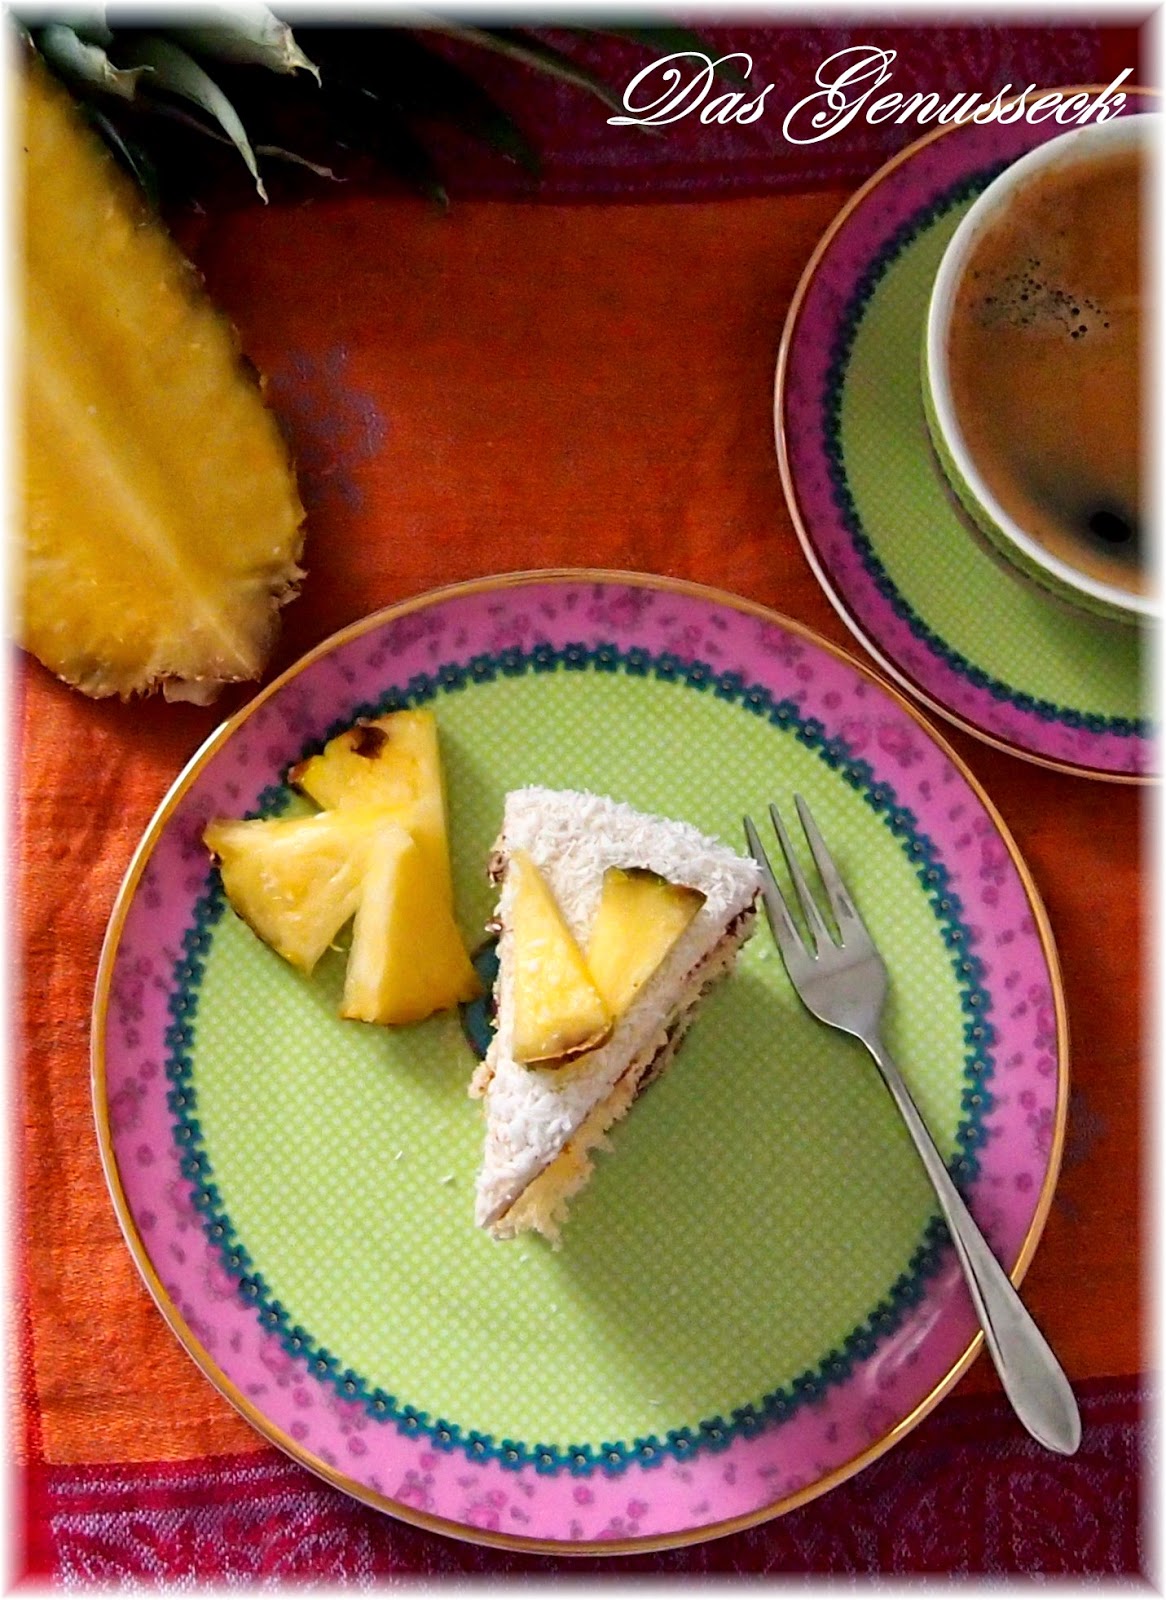 Das Genusseck: Ananas-Bananen-Torte mit Mousse au Chocolat